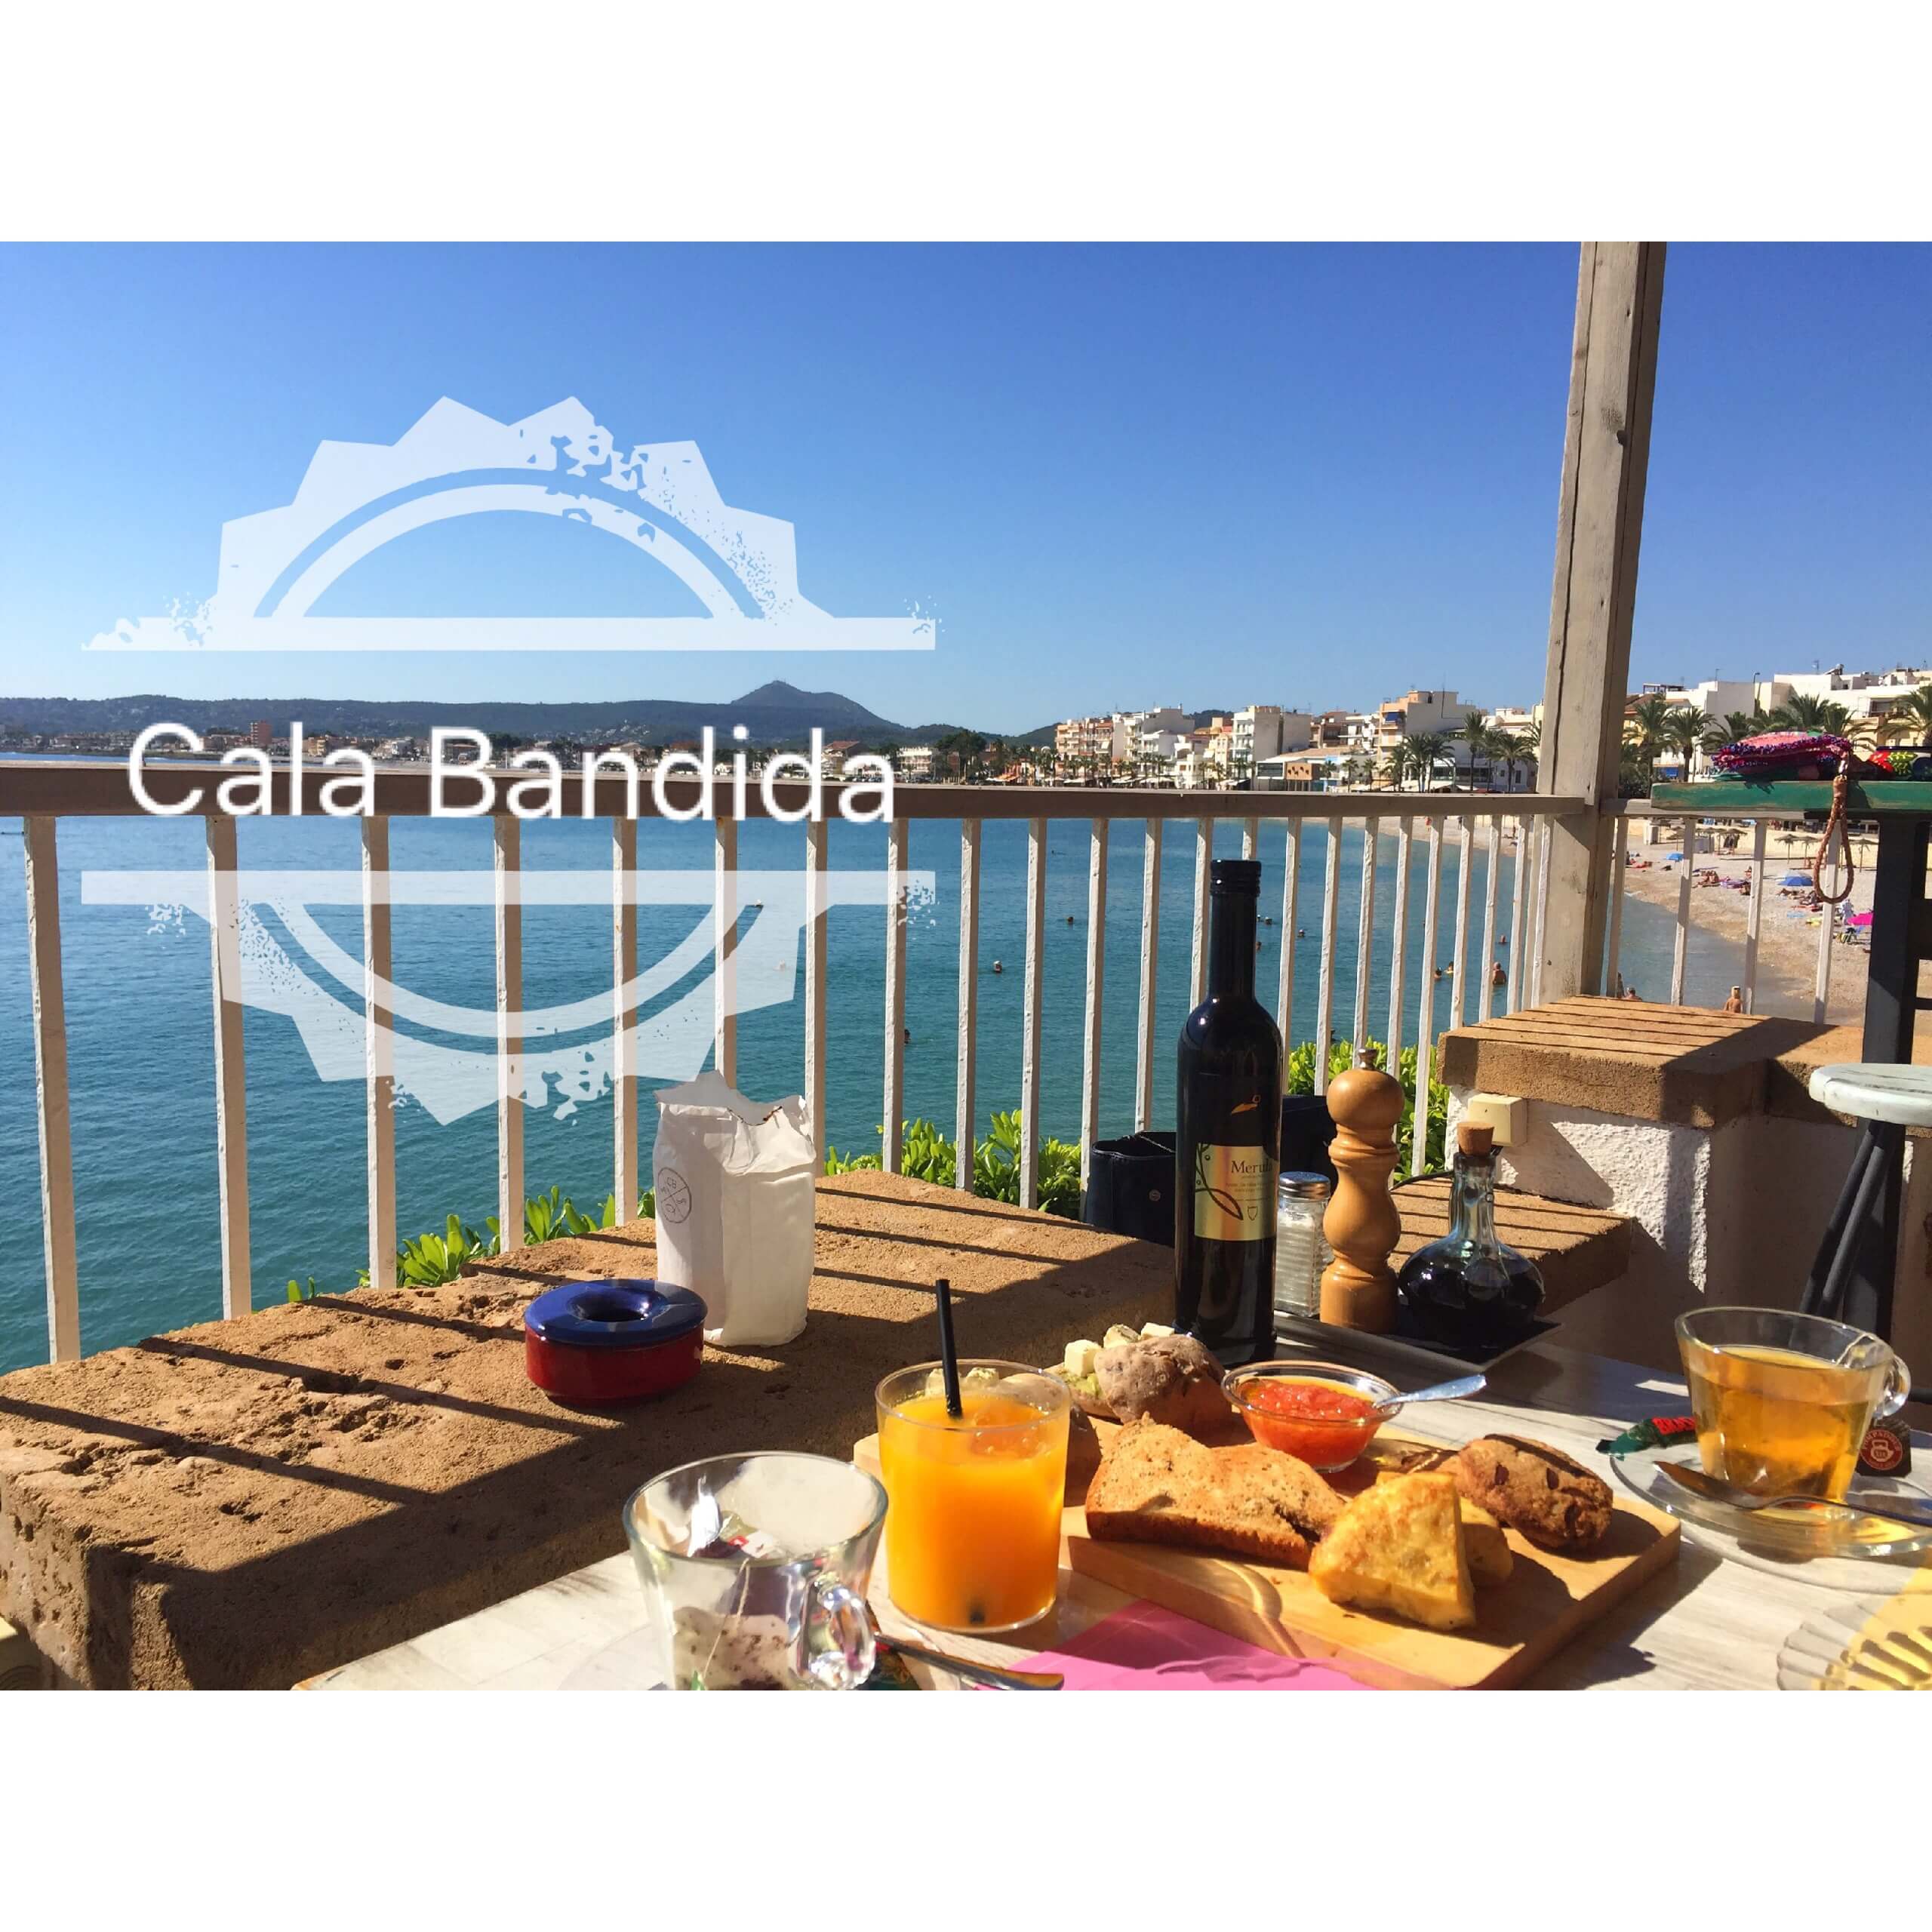 Cala bandida Restaurant with amazing sea view Javea